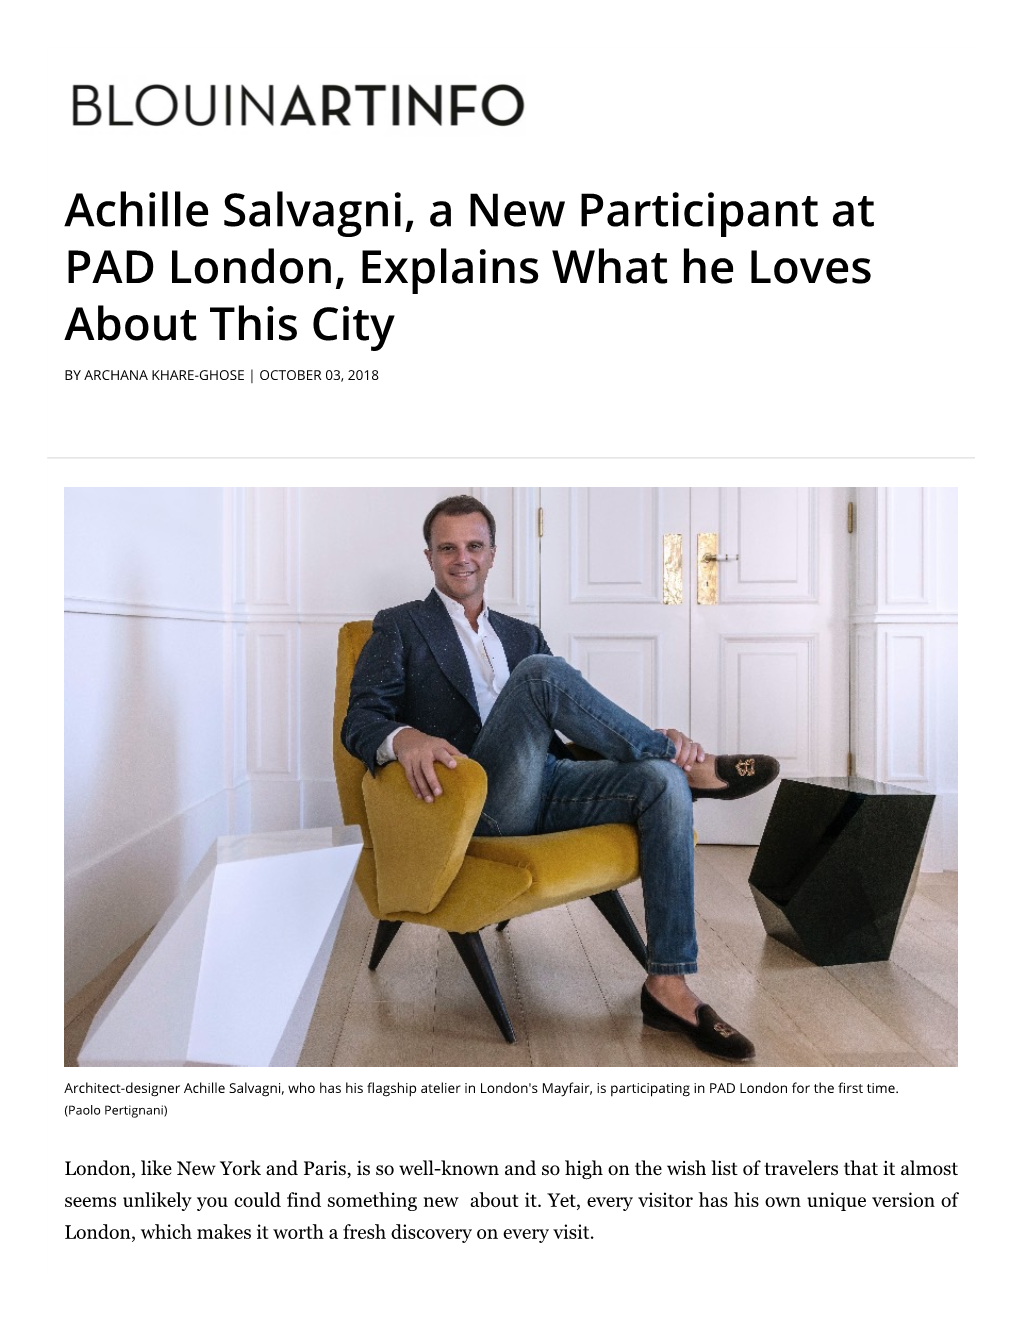 Achille Salvagni, a New Participant at PAD London, Explains What He Loves About This City